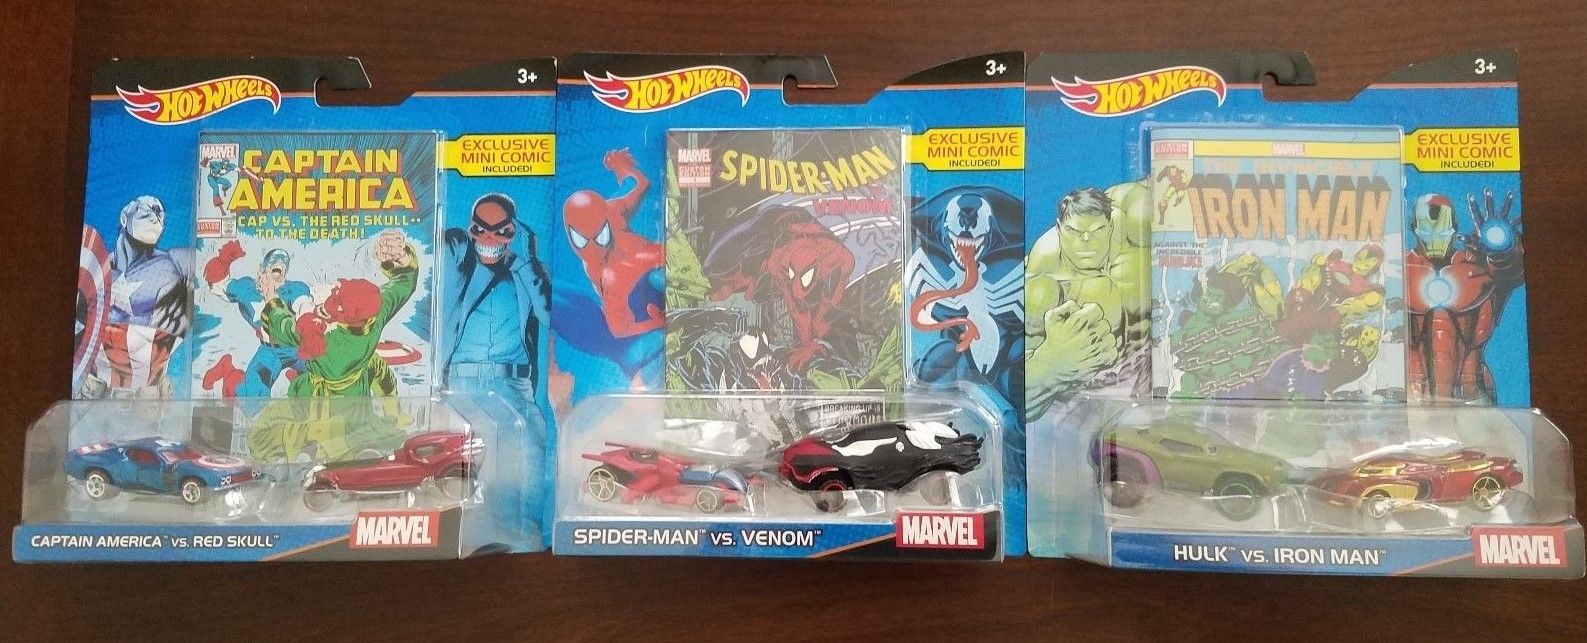 3 Hot Wheels Marvel 2 Pack Character Cars w/ Comics Iron Man, Hulk, Capt America